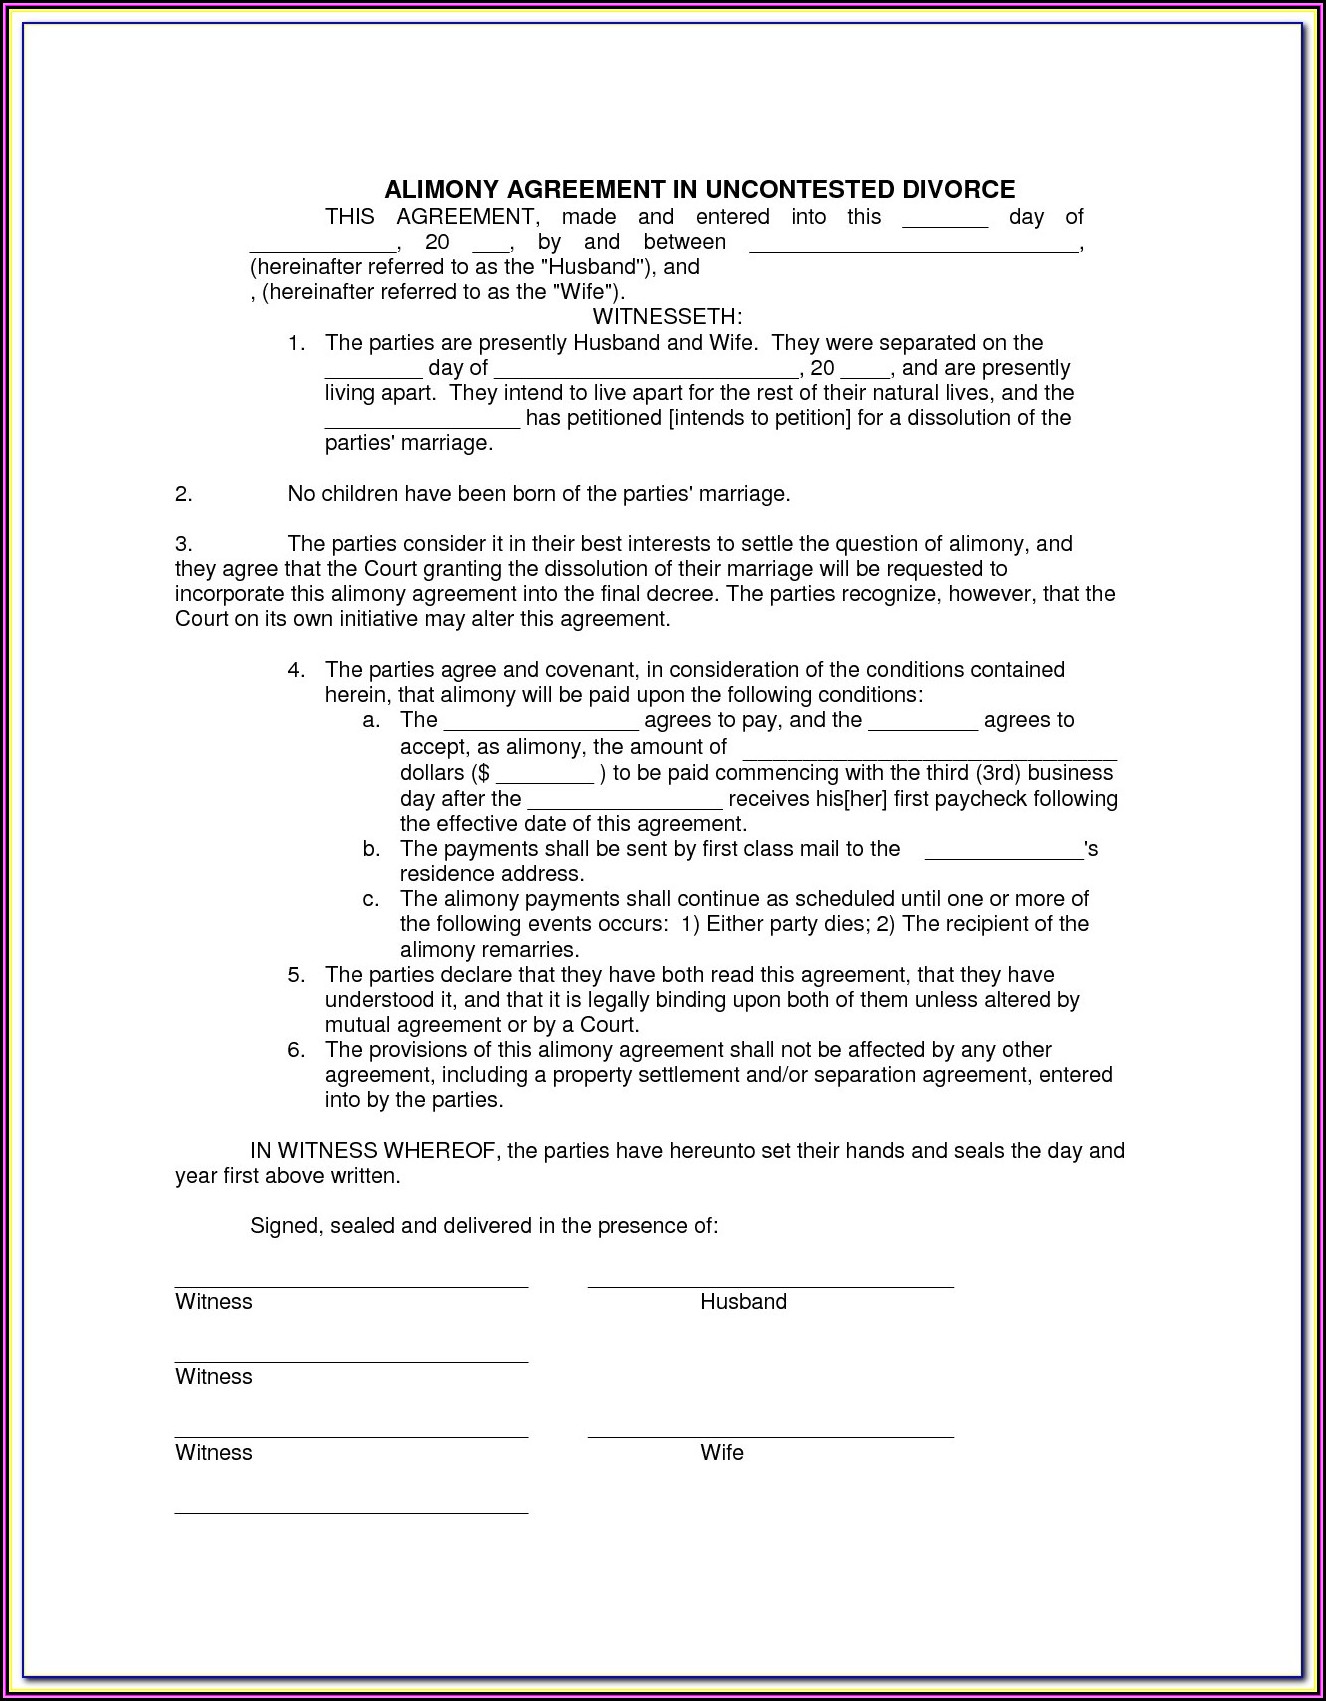 Dekalb County Court Forms